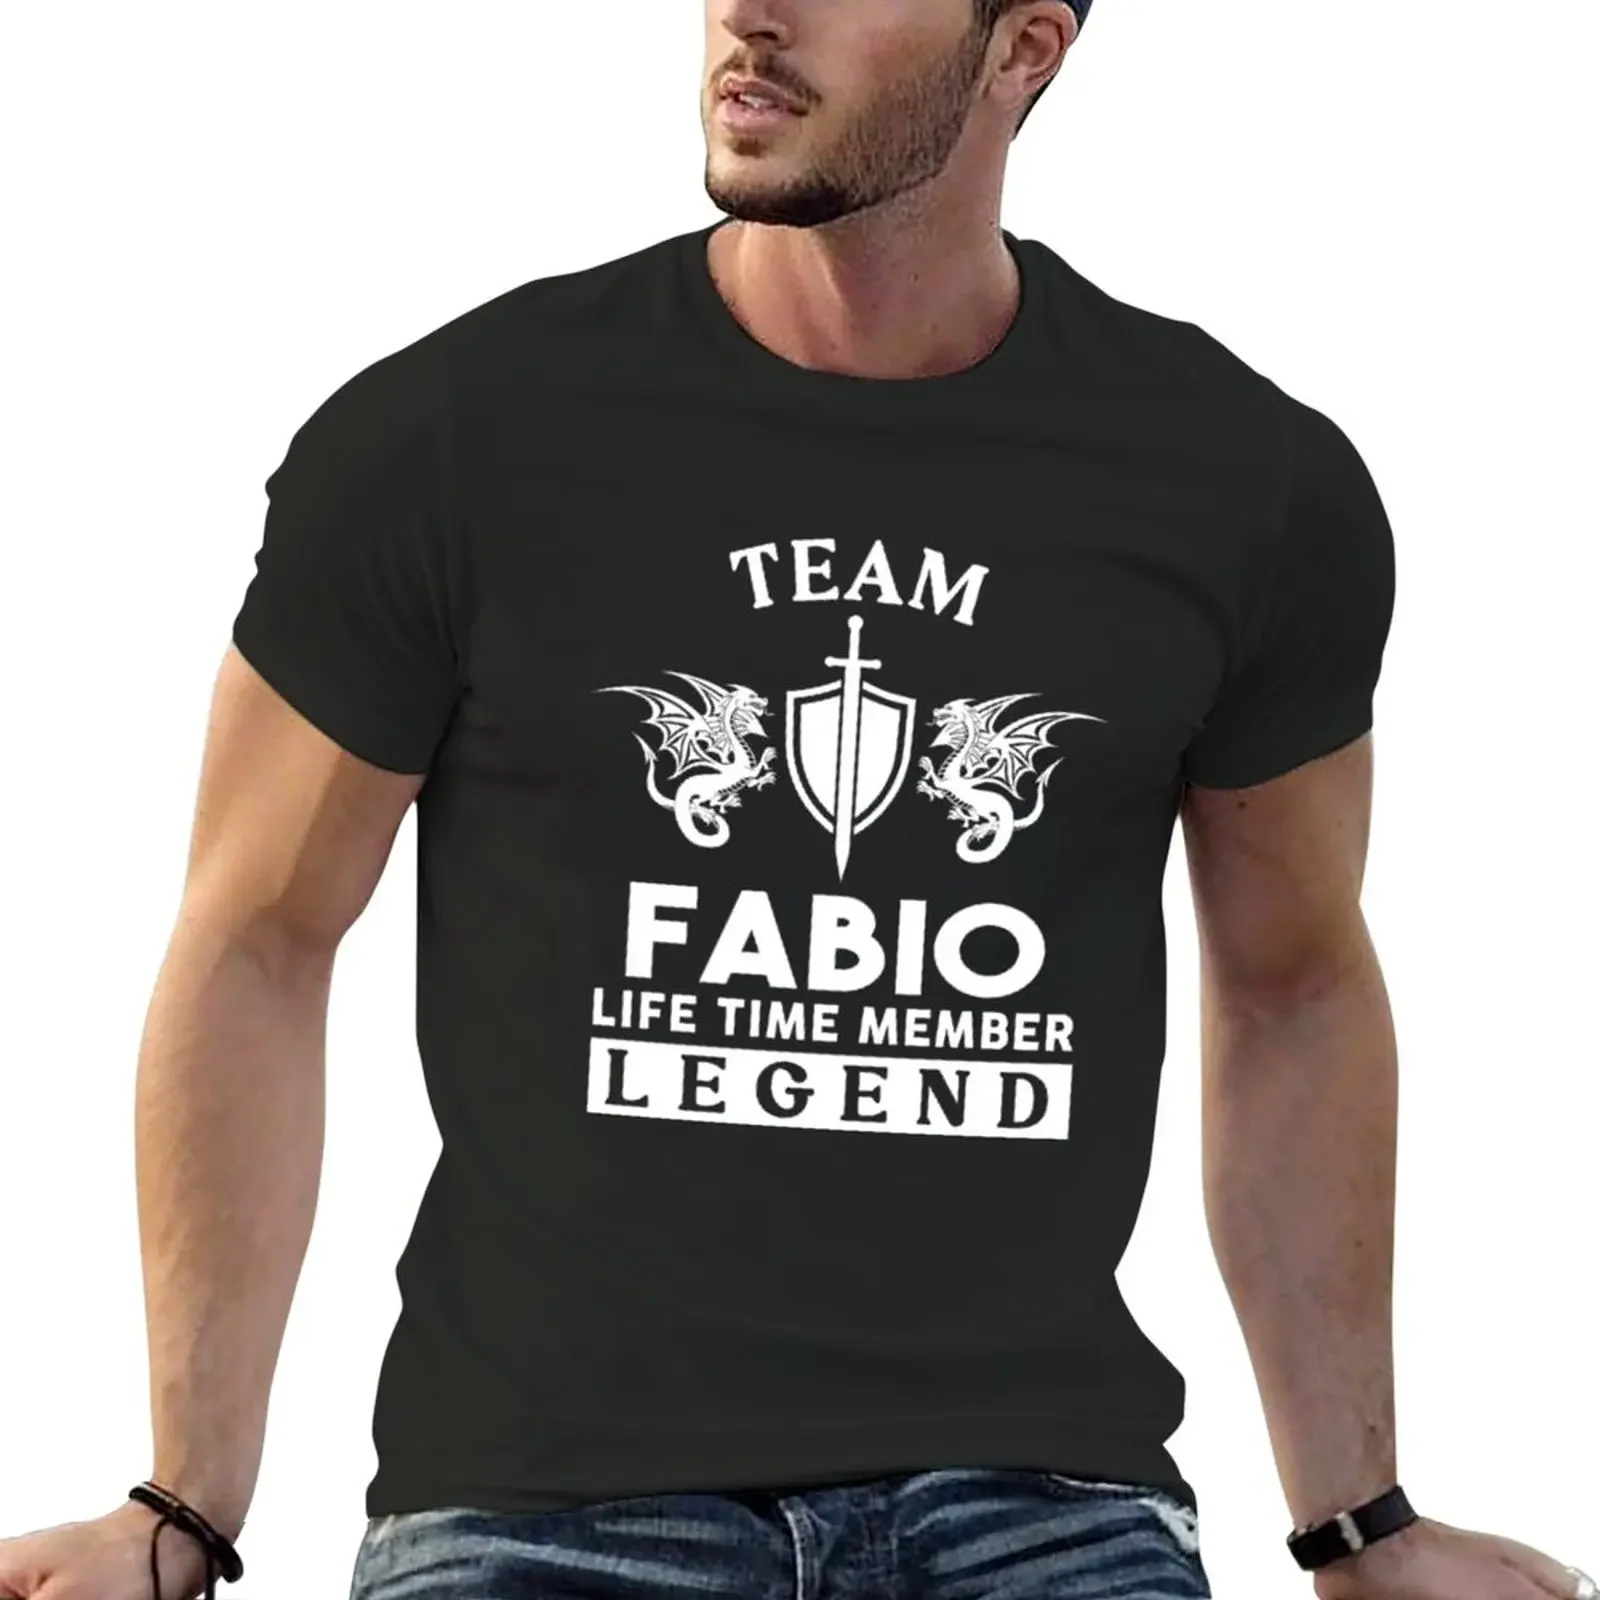 

Fabio Fabio NameFabio Life Time Member Legend Gift Item Tee T-Shirt blacks hippie clothes sports fans Short sleeve tee men